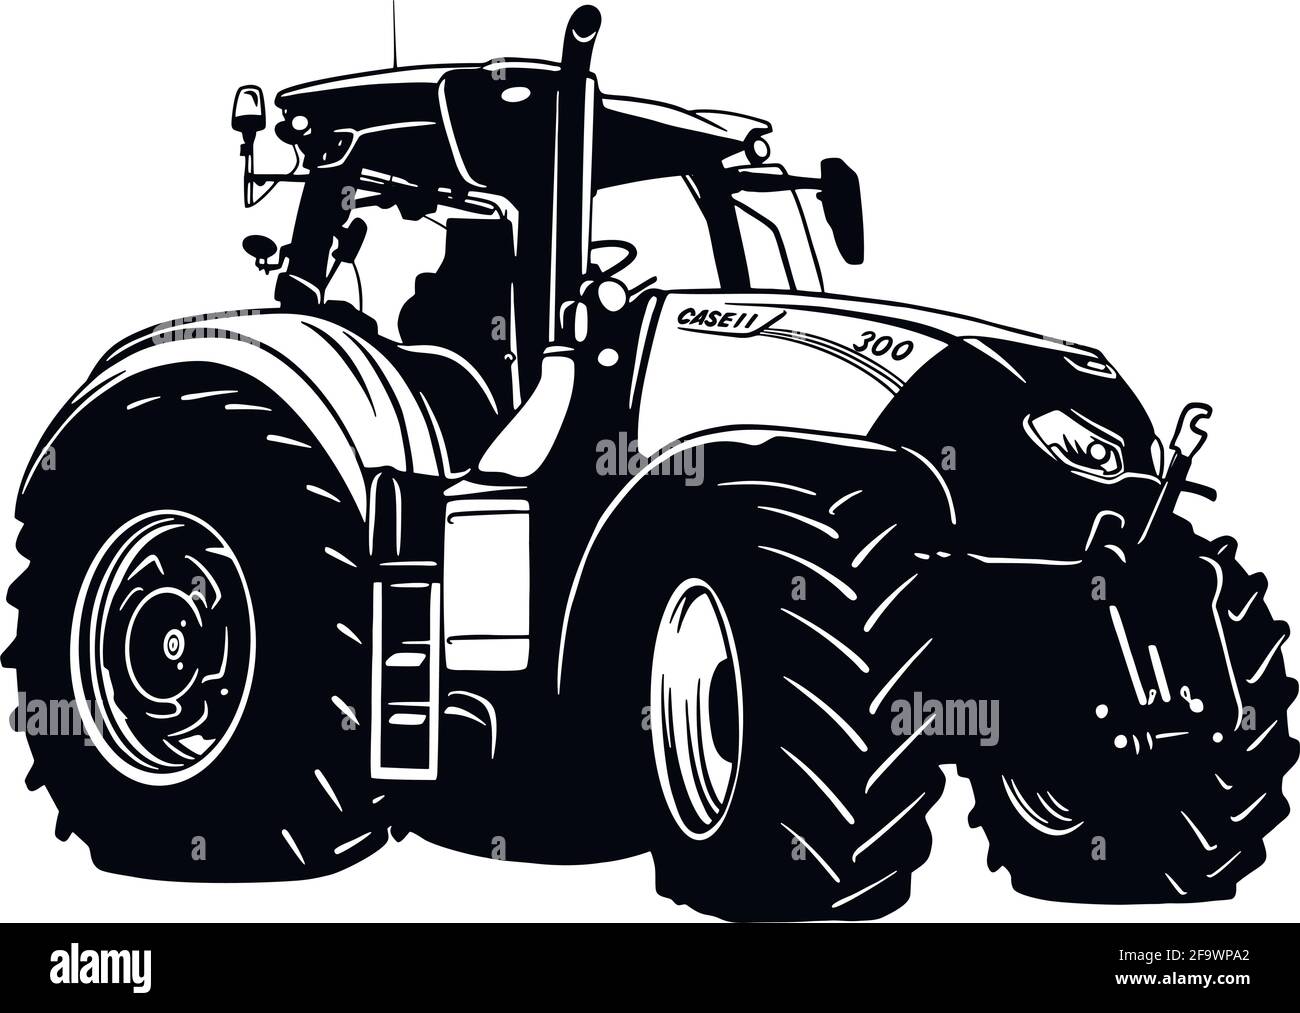 Traktor Auf Dem Bauernhof, Ernte, Farmer Vehicle, Schablone, Silhouette,  Vektorgrafiken Stock-Vektorgrafik - Alamy